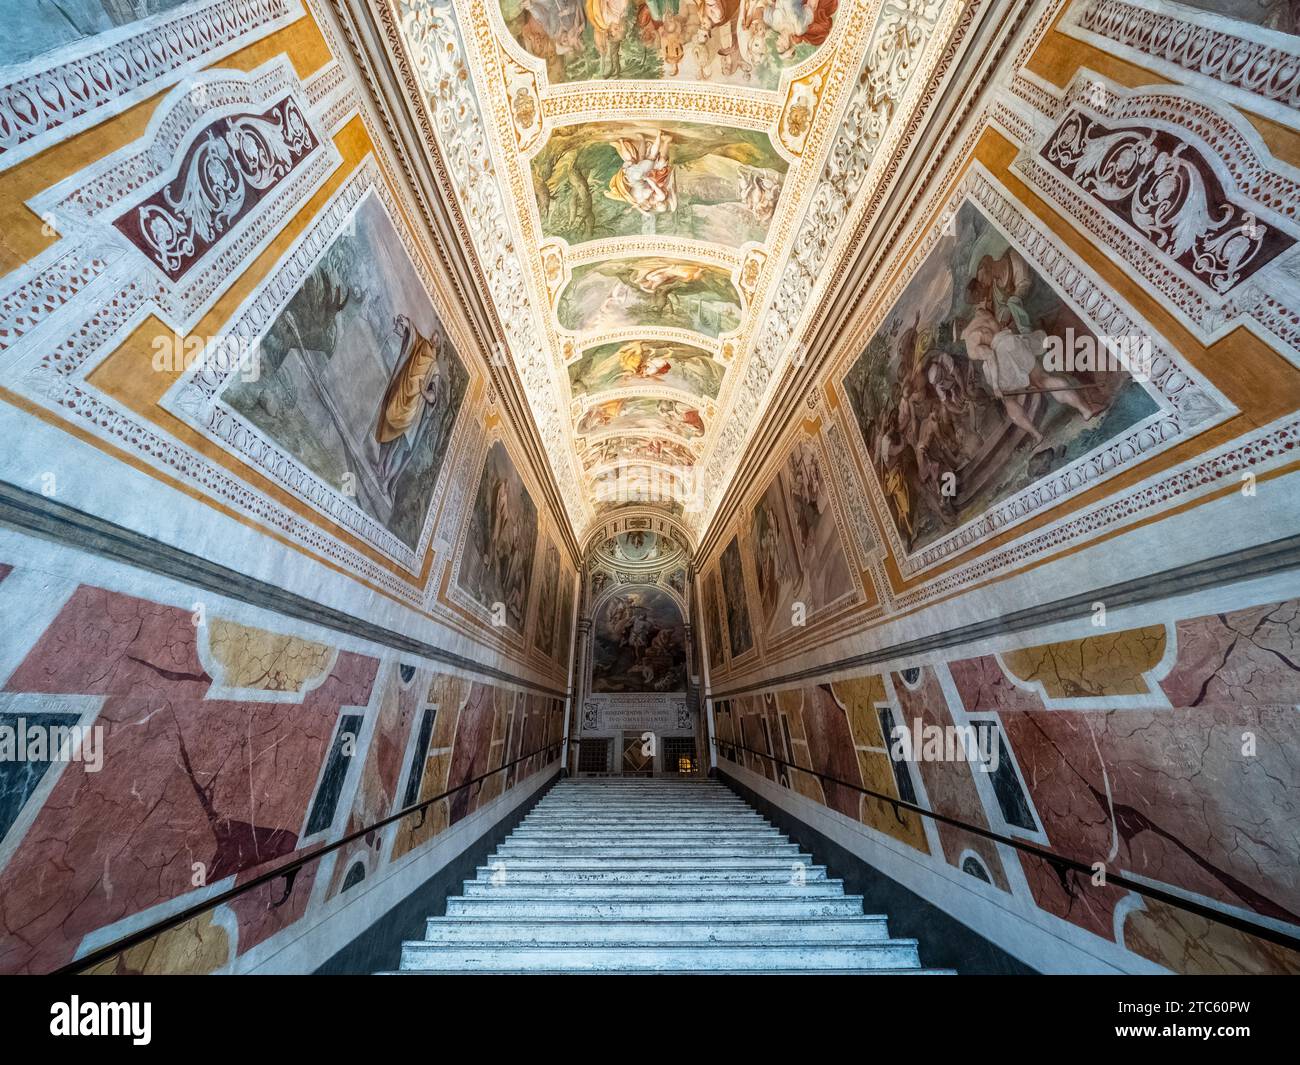 Stairs in the Pontifical Sanctuary of the Holy Stairs (Pontificio Santuario della Scala Santa) - Rome, Italy Stock Photo